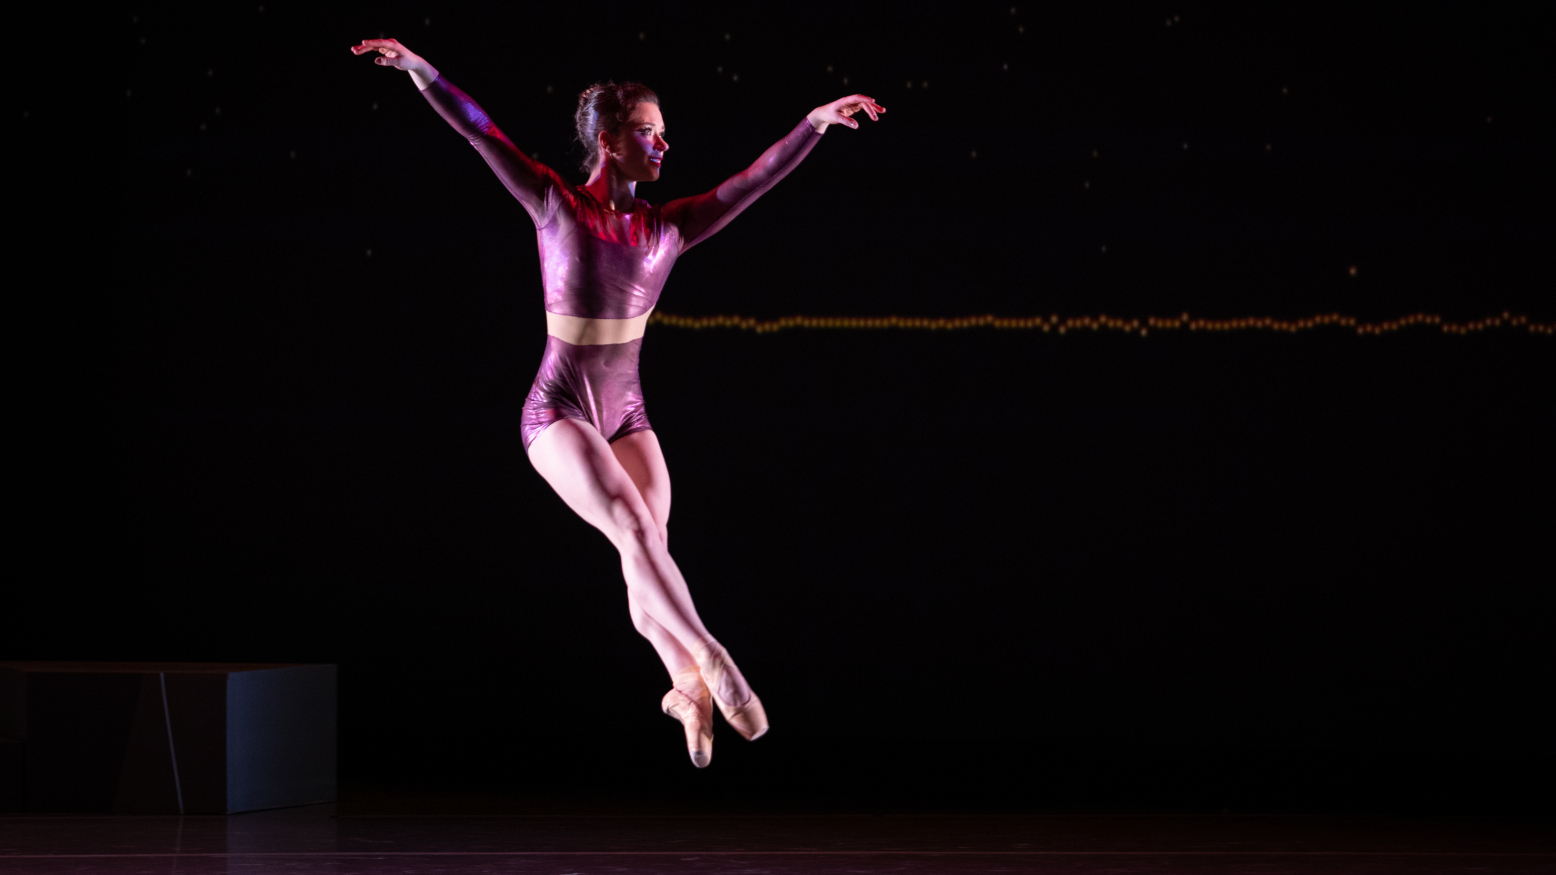 A ballet dancer in the air mid-jump